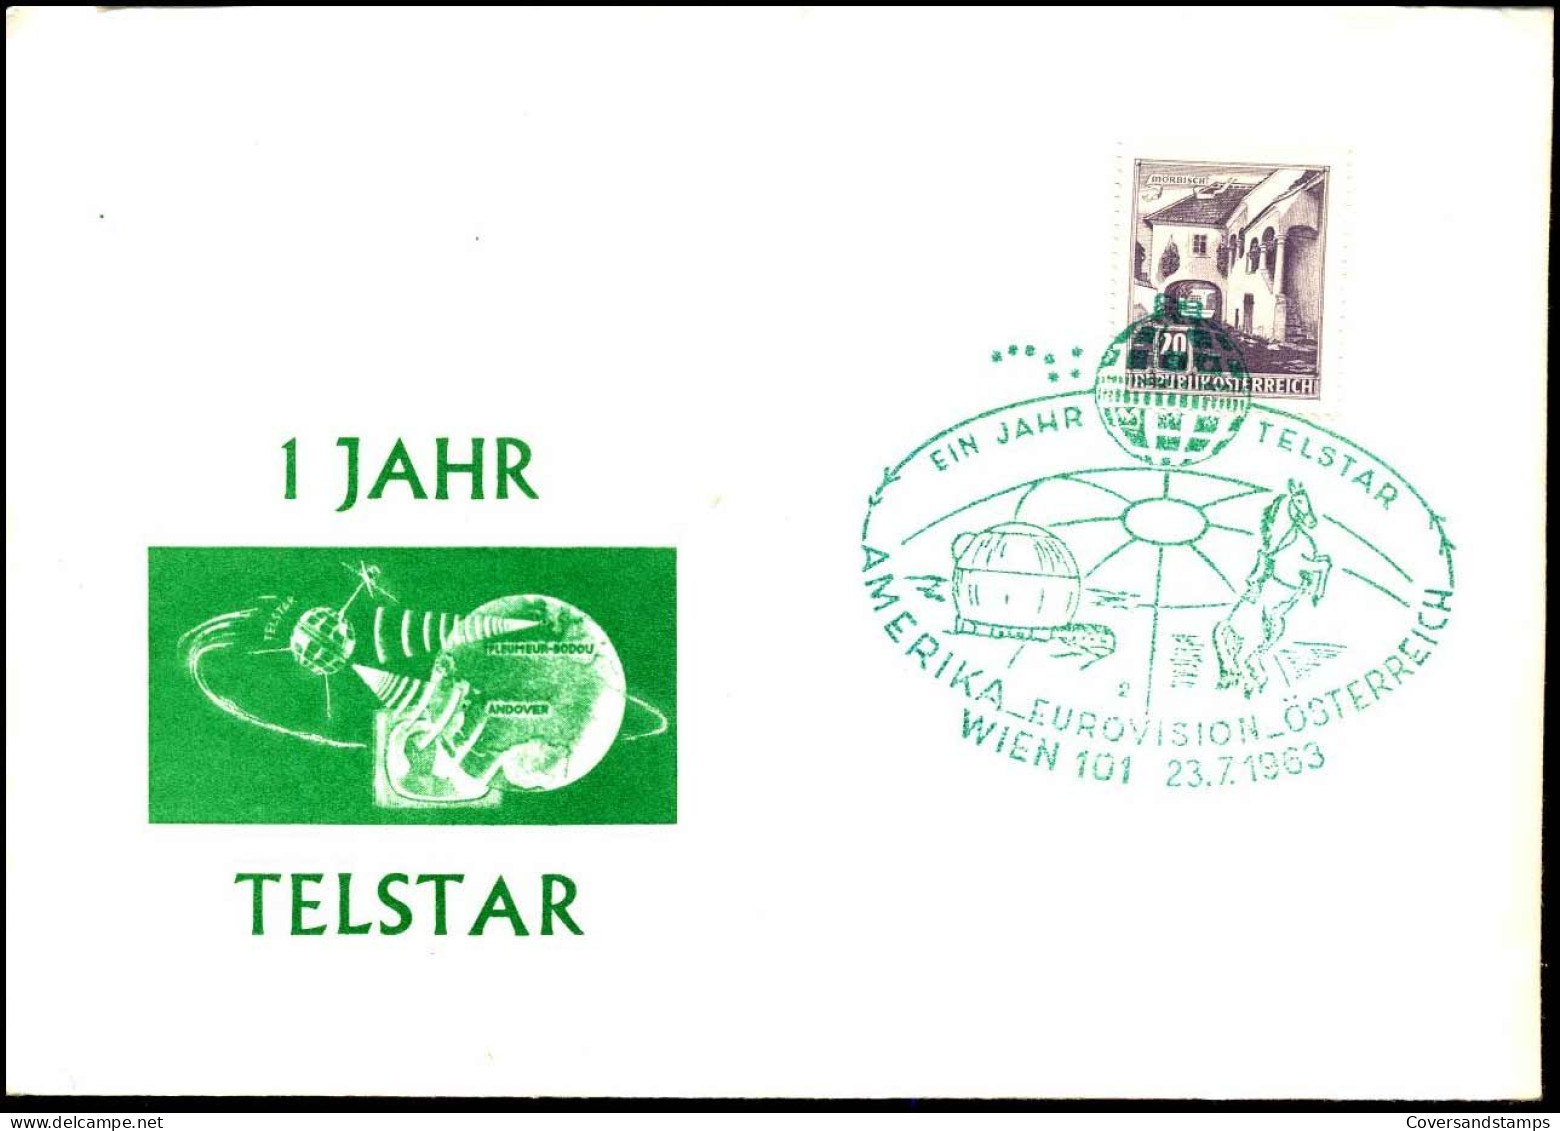 FDC - 1 Jahr Telstar - FDC